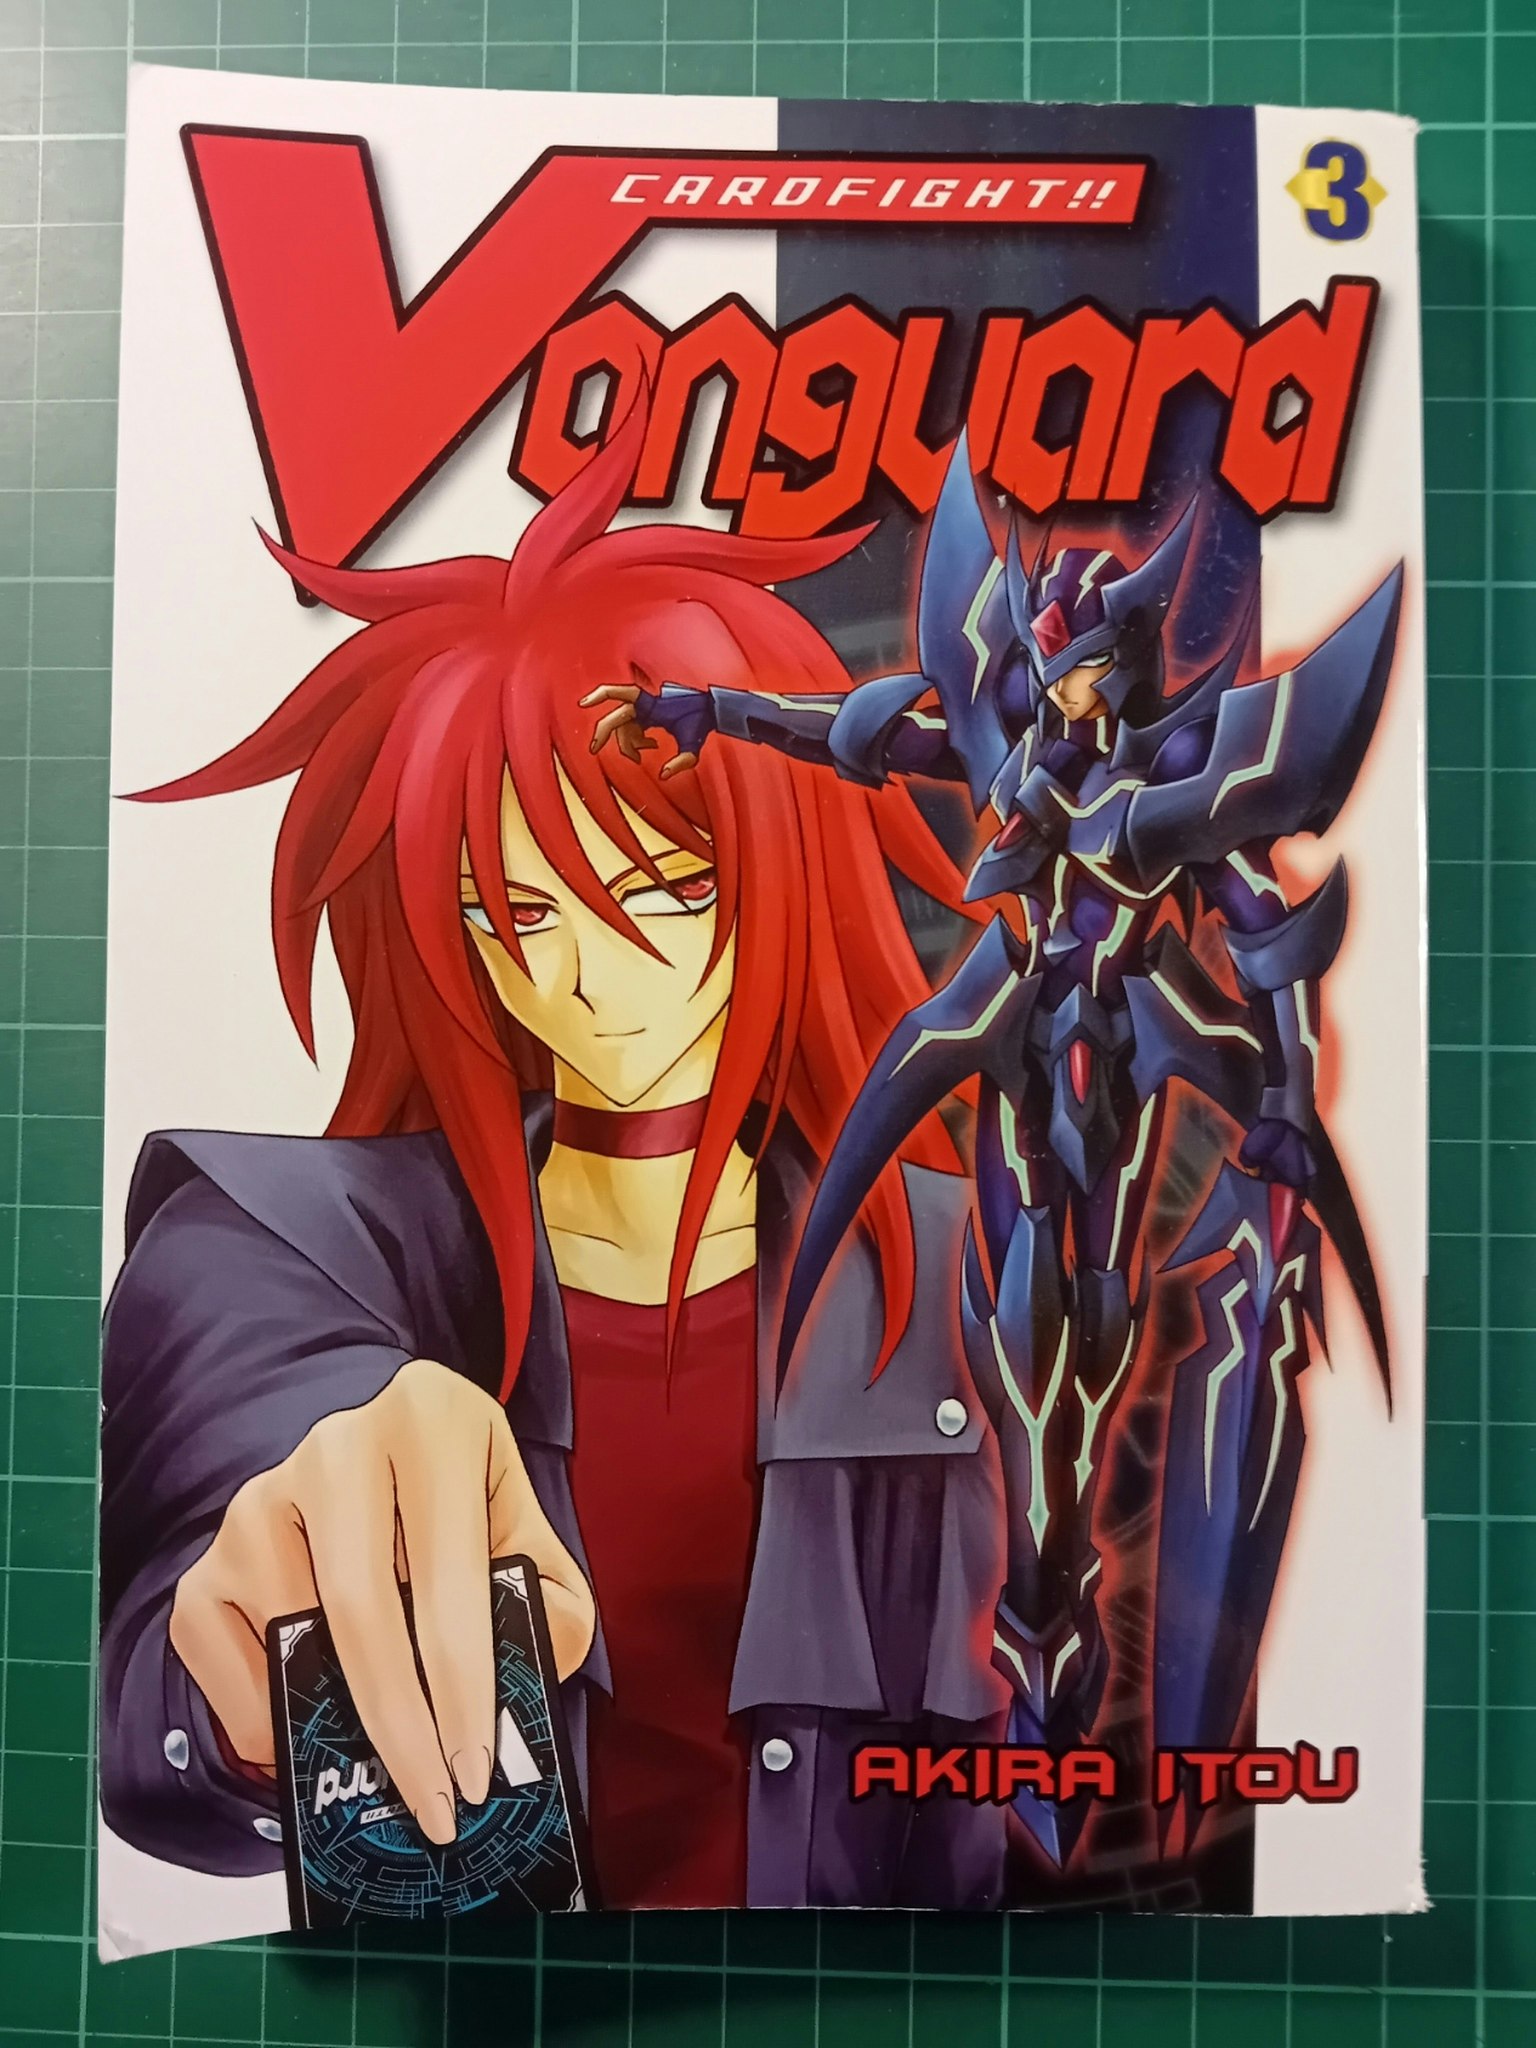 Cardfight!! Vanguard vol 03 (USA)